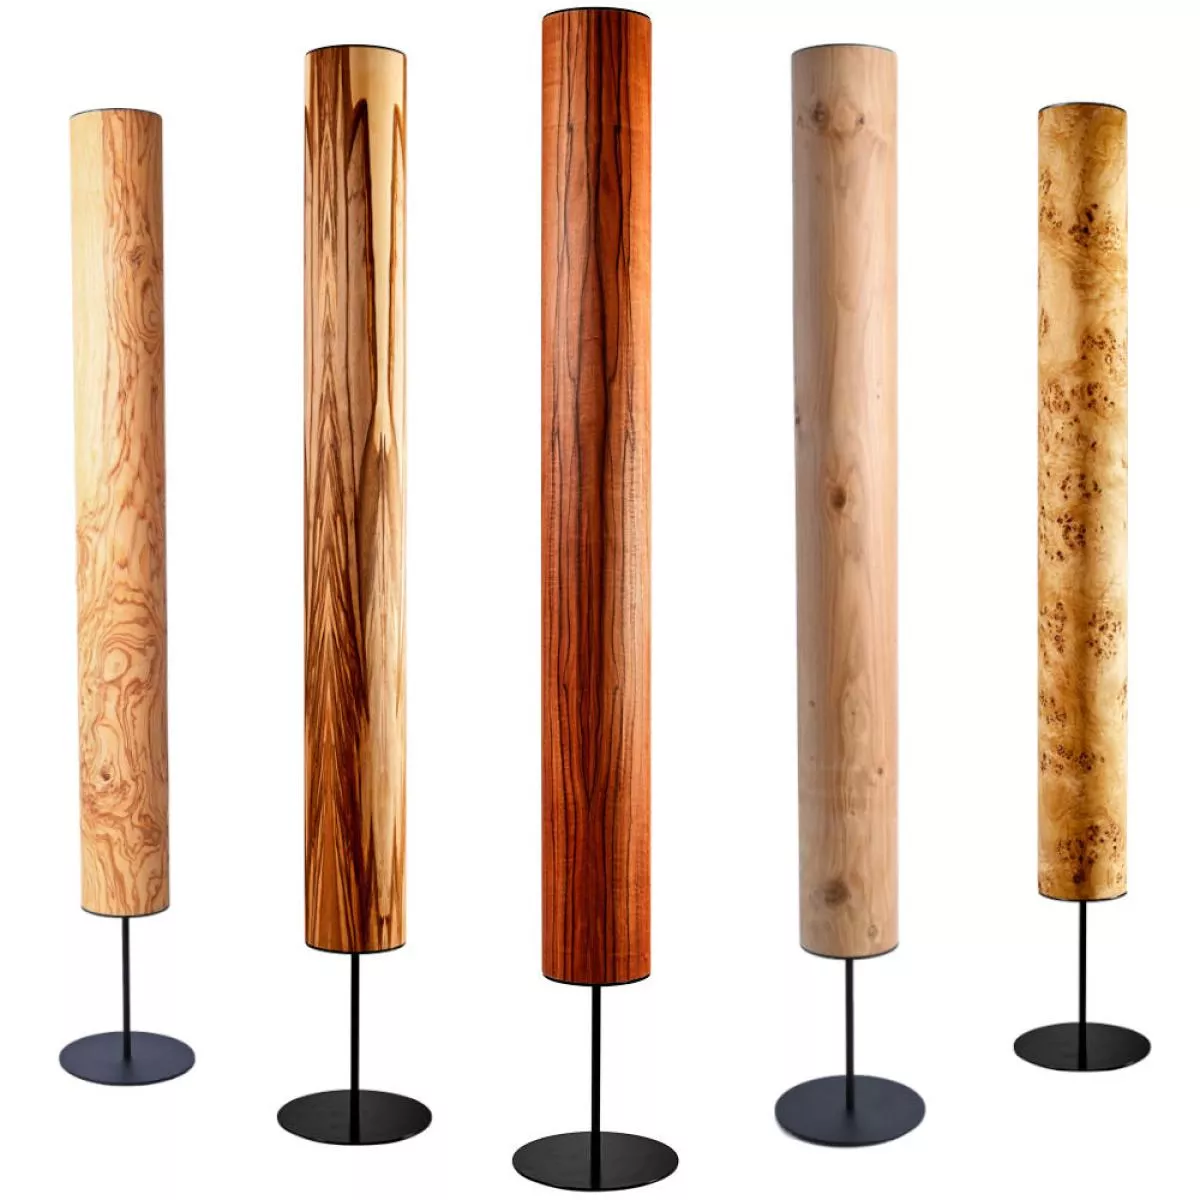 Artful Design Floor Lamp with Wood Veneer Cylinder Shade (Height 186 cm)